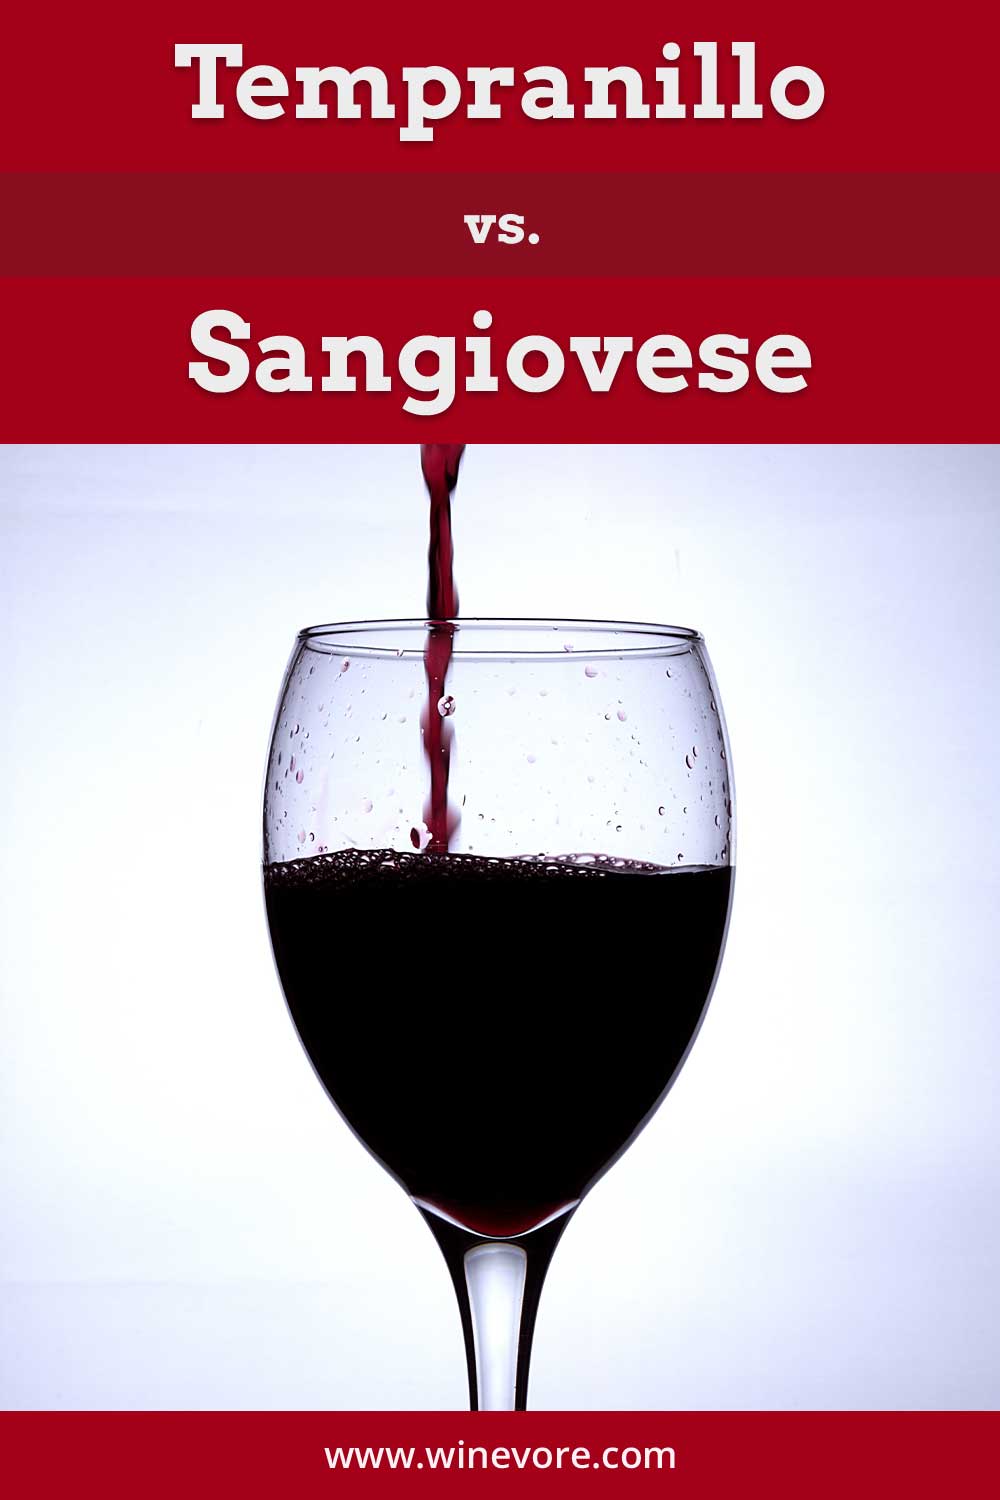 Filling red wine in a glass - Tempranillo vs Sangiovese.